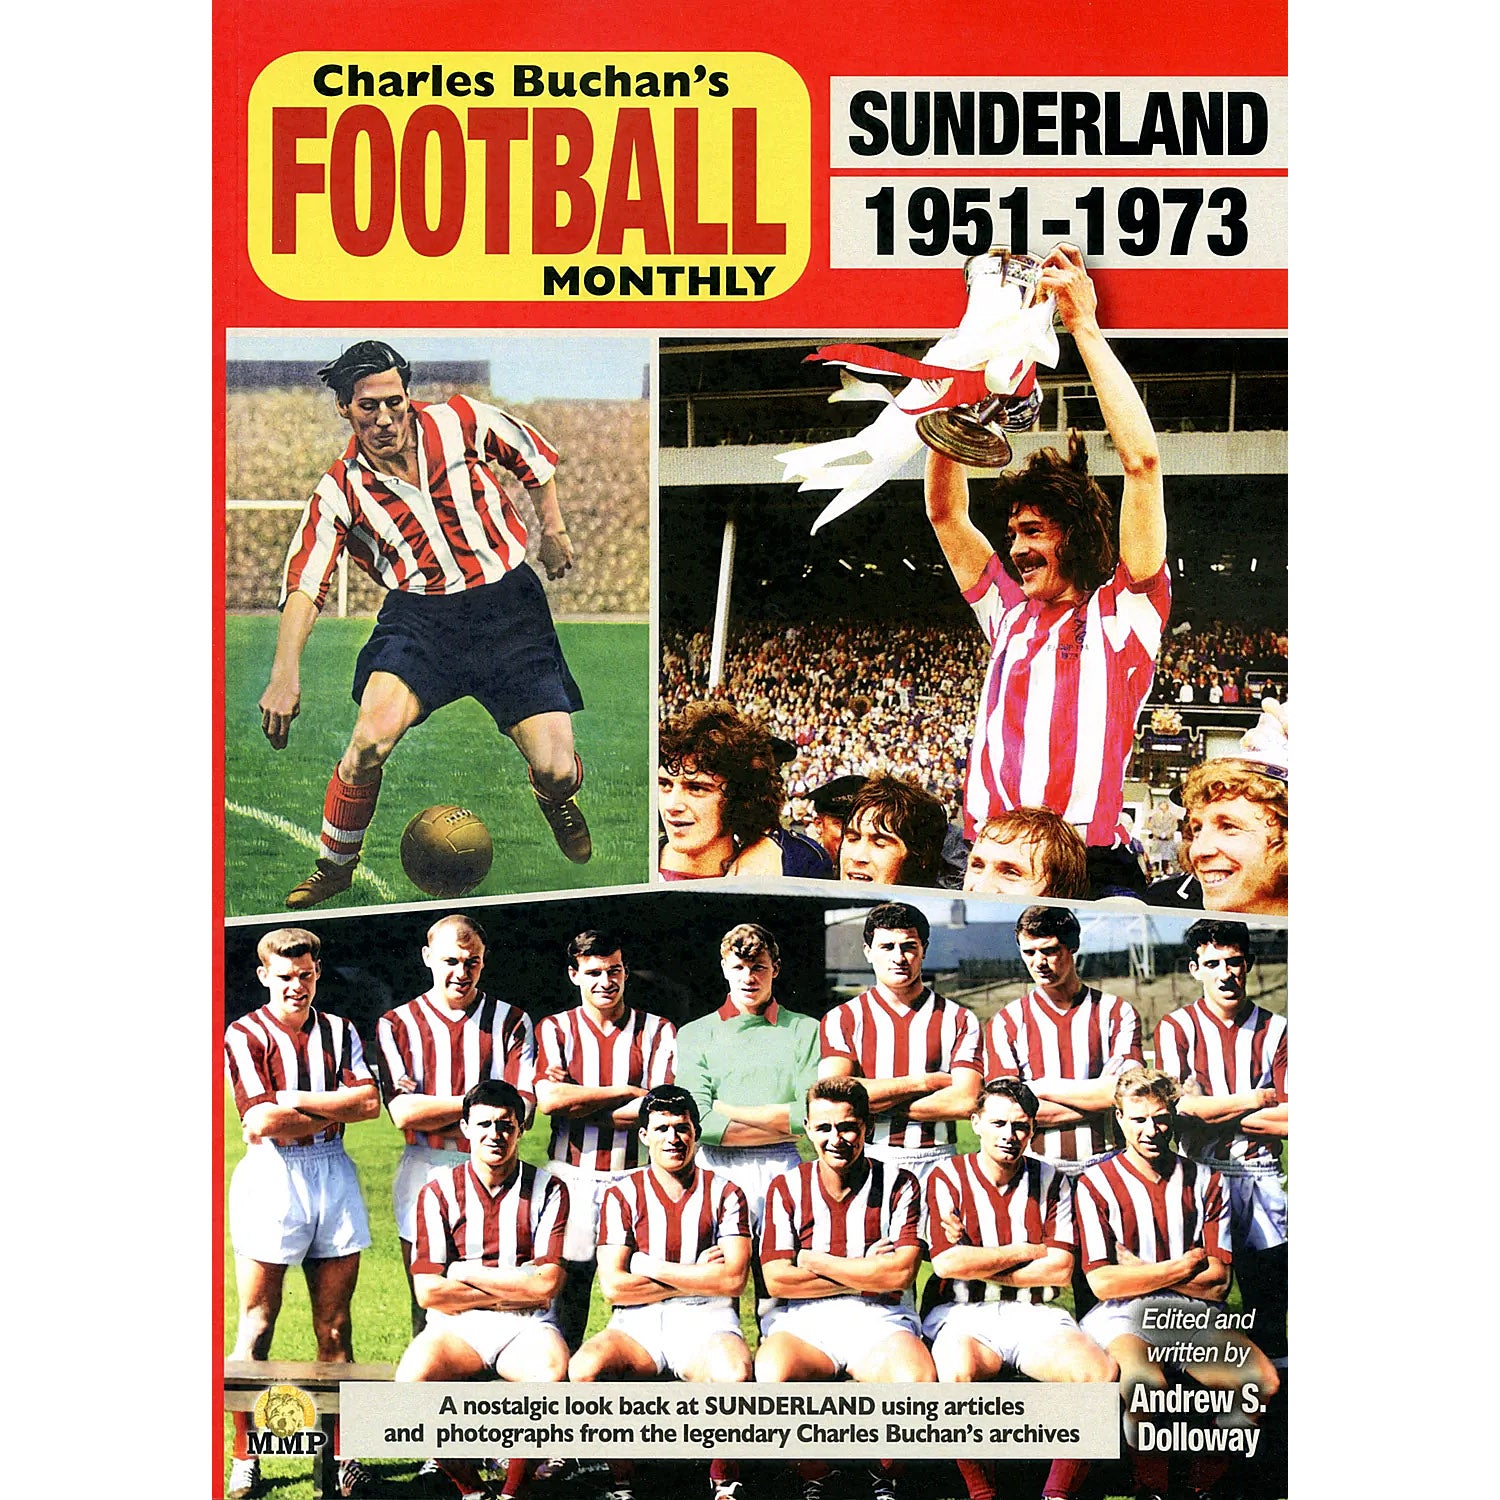 Charles Buchan's Football Monthly – Sunderland 1951-1973